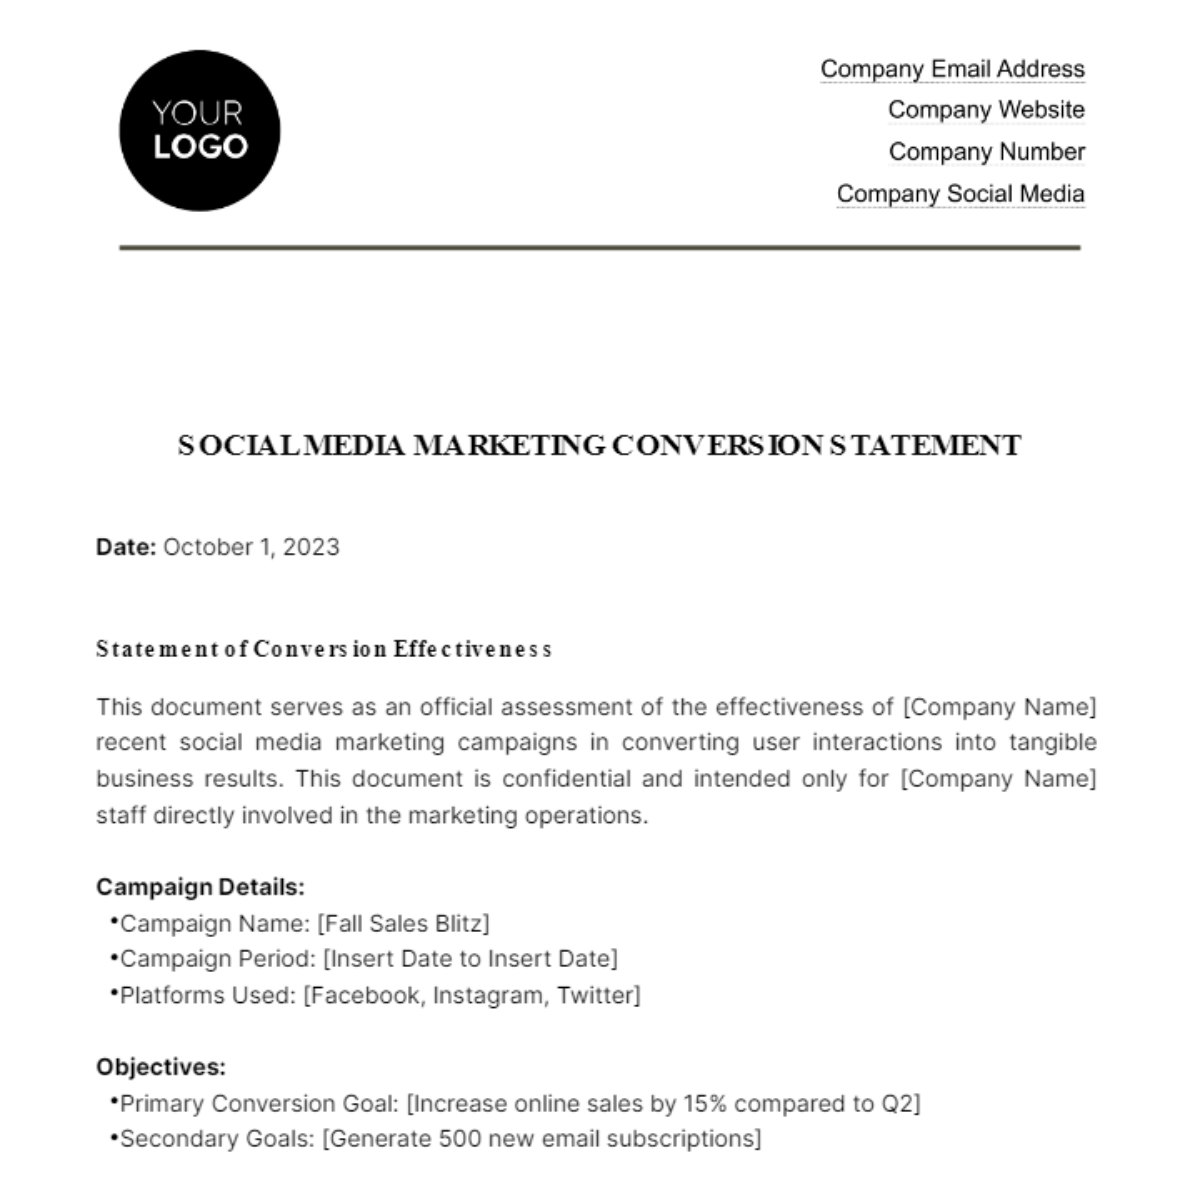 Social Media Marketing Conversion Statement Template